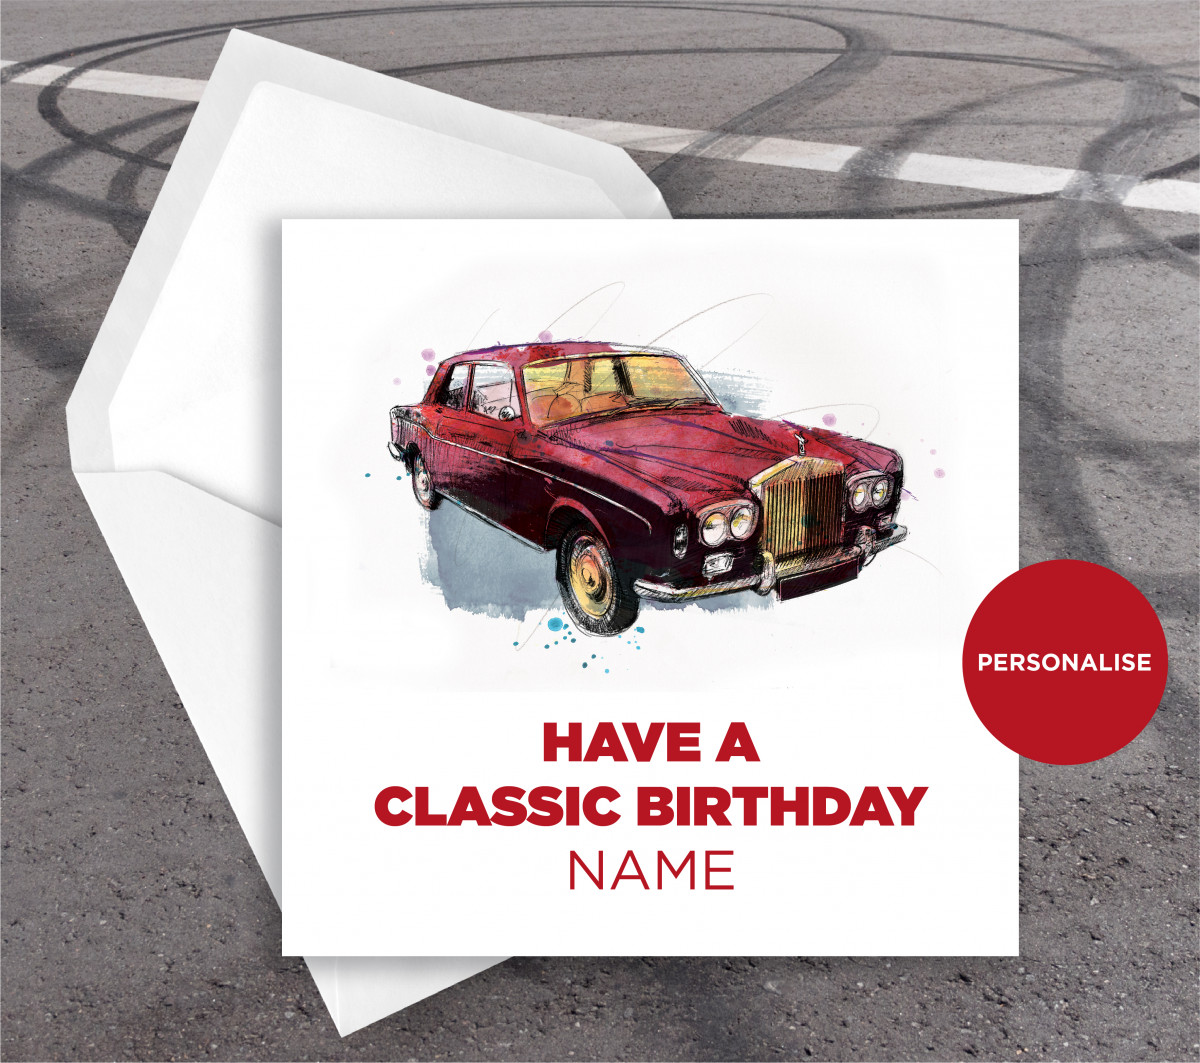 Rolls Royce, personalised birthday card